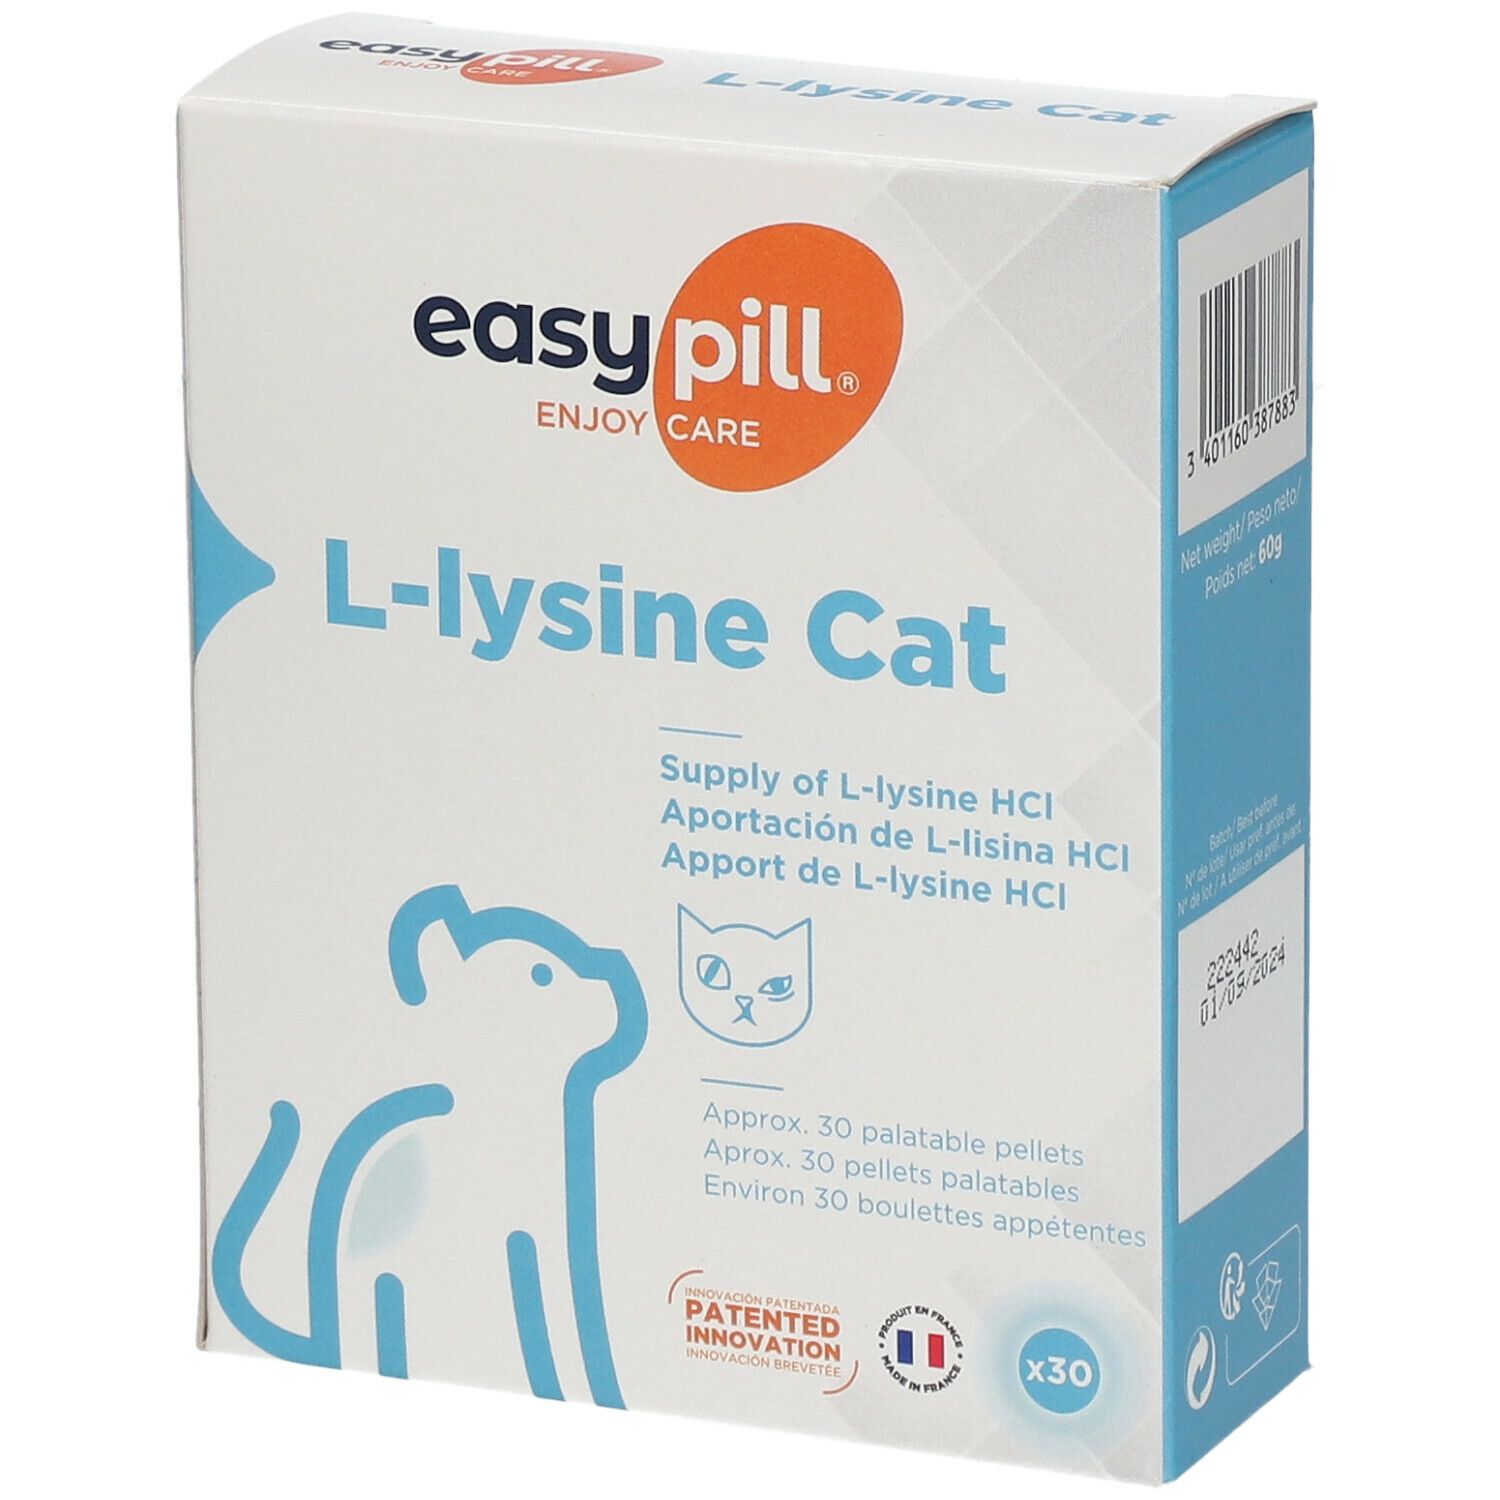 EASYPILL L-lysine